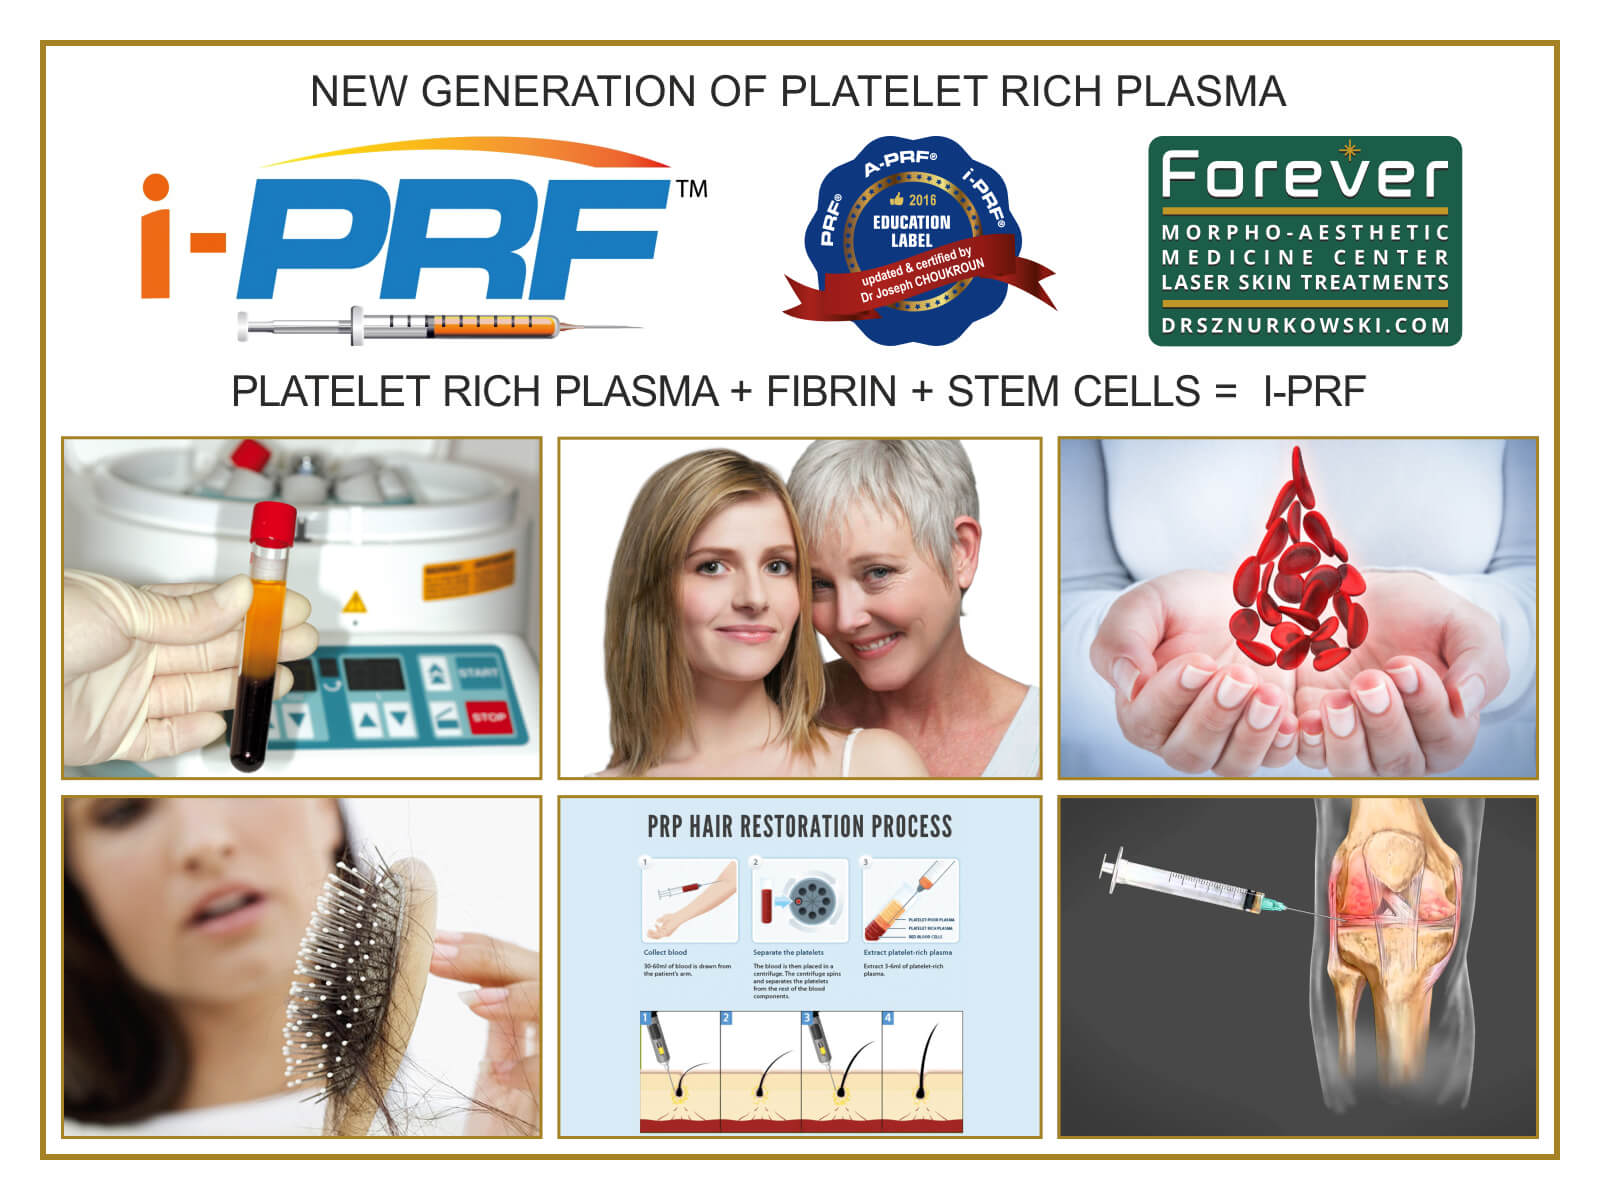 New Generation of Platelet Rich Plasma (80x60) EN.jpg